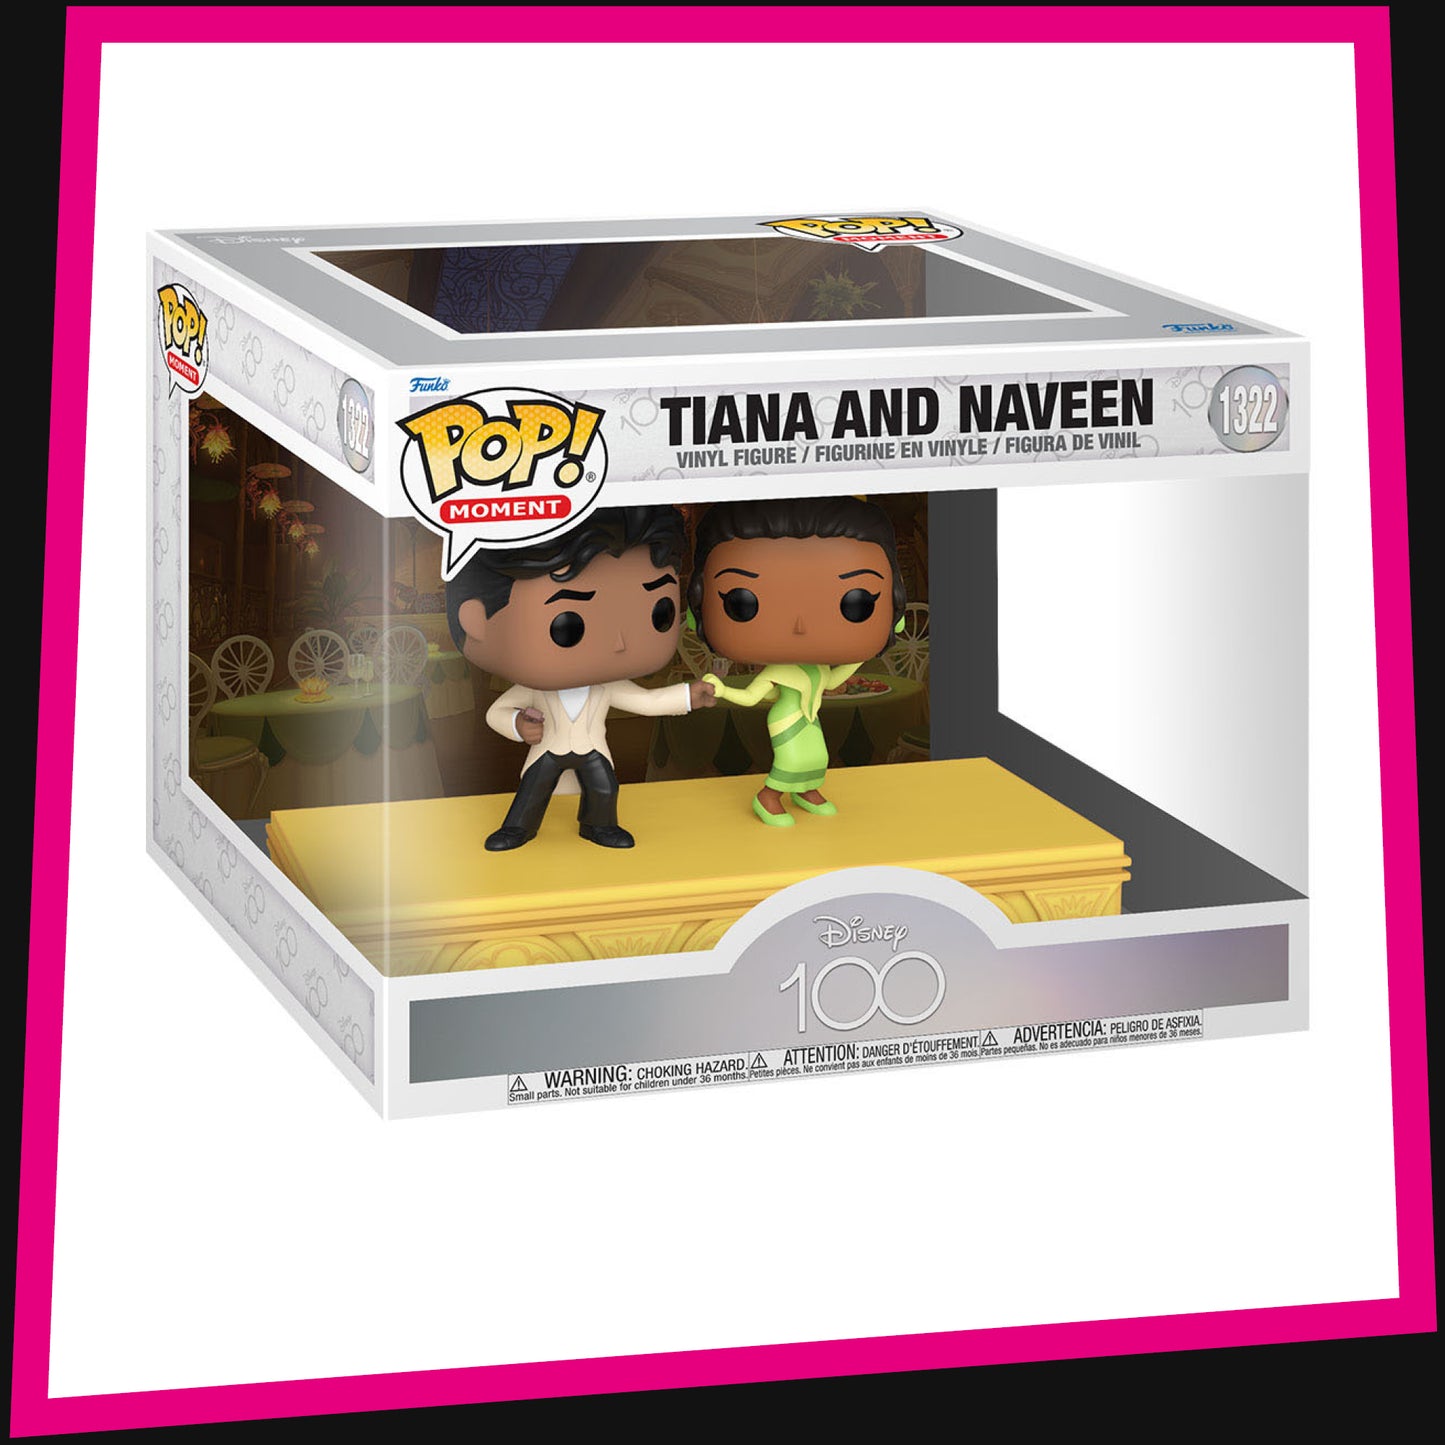 Tiana and Naveen - Disney 100 Anniversary #1322 Funko POP! Vinyl Moment 3.75"